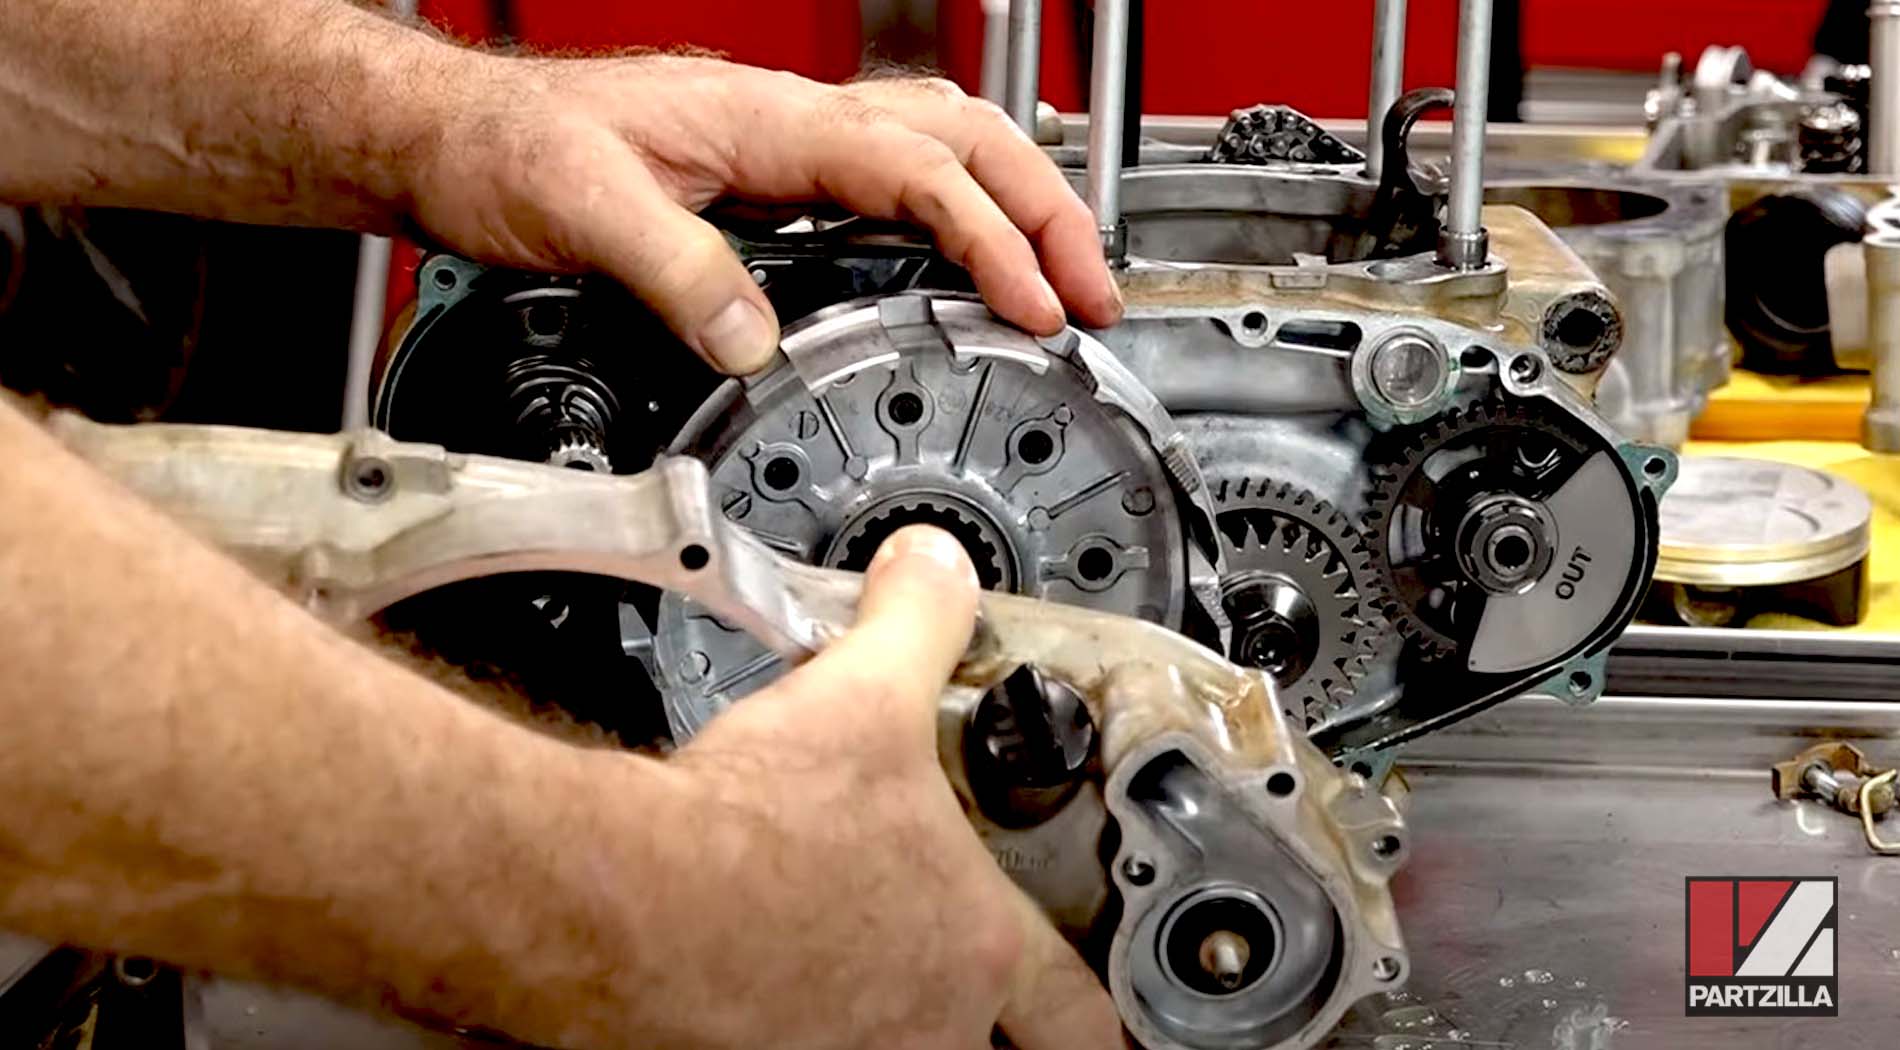 Honda CRF450R engine breakdown crankcase cover